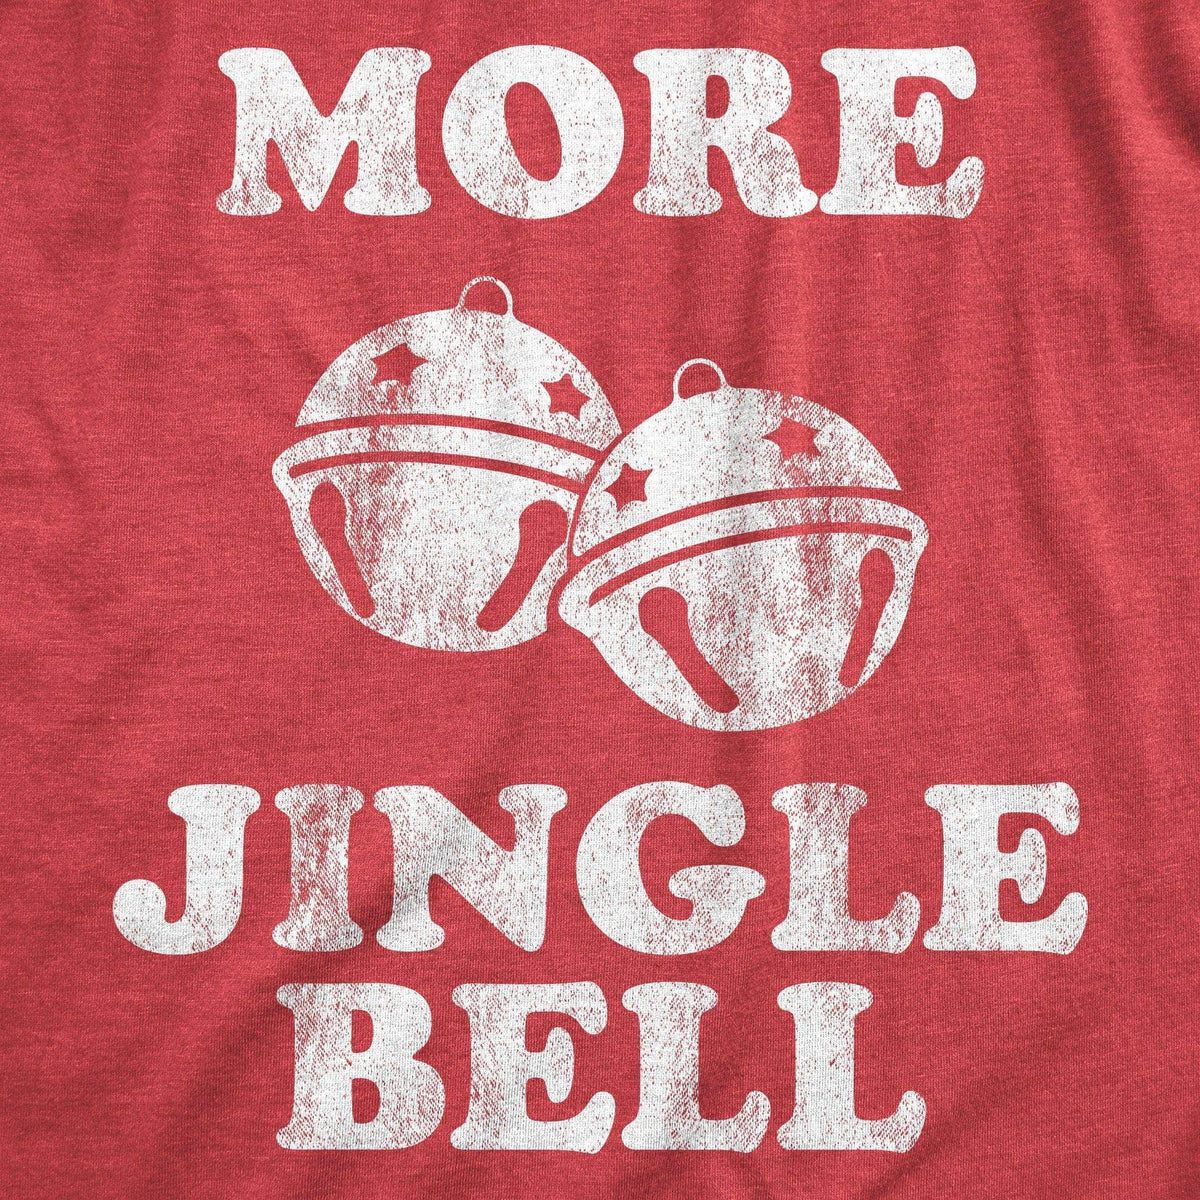 More Jingle Bells Women&#39;s Tshirt - Crazy Dog T-Shirts